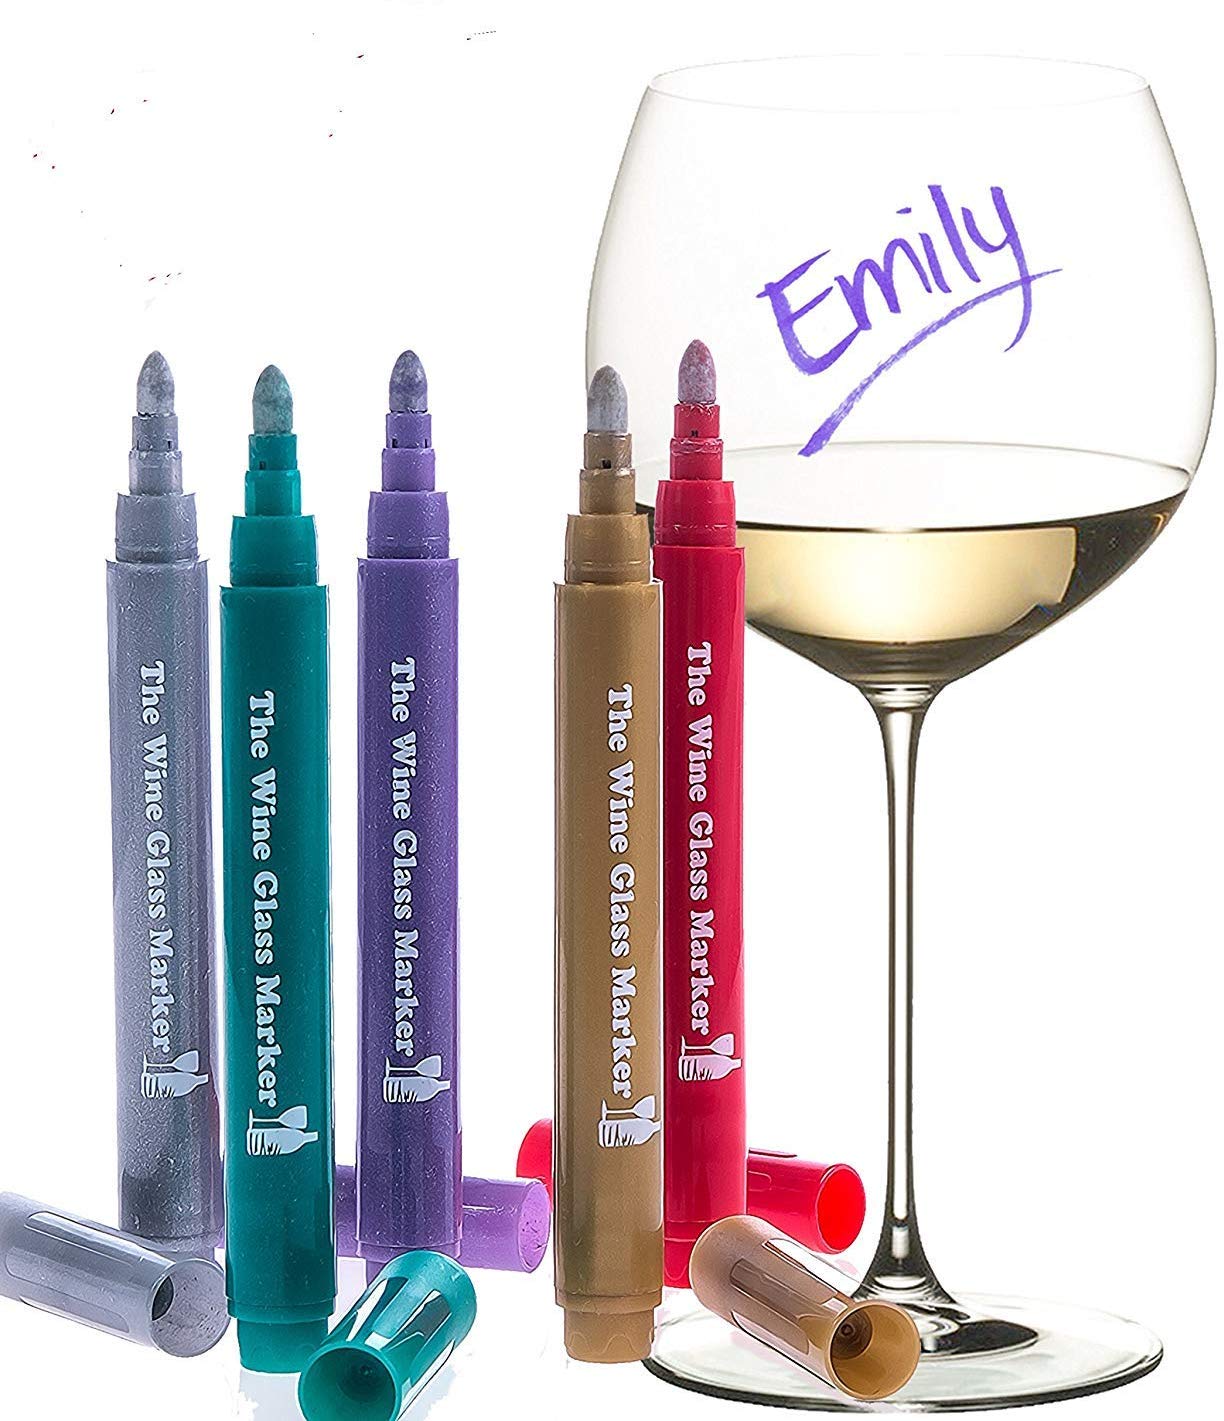 The Wine Glass Marker Vibrant Glass Marker, Set of 5